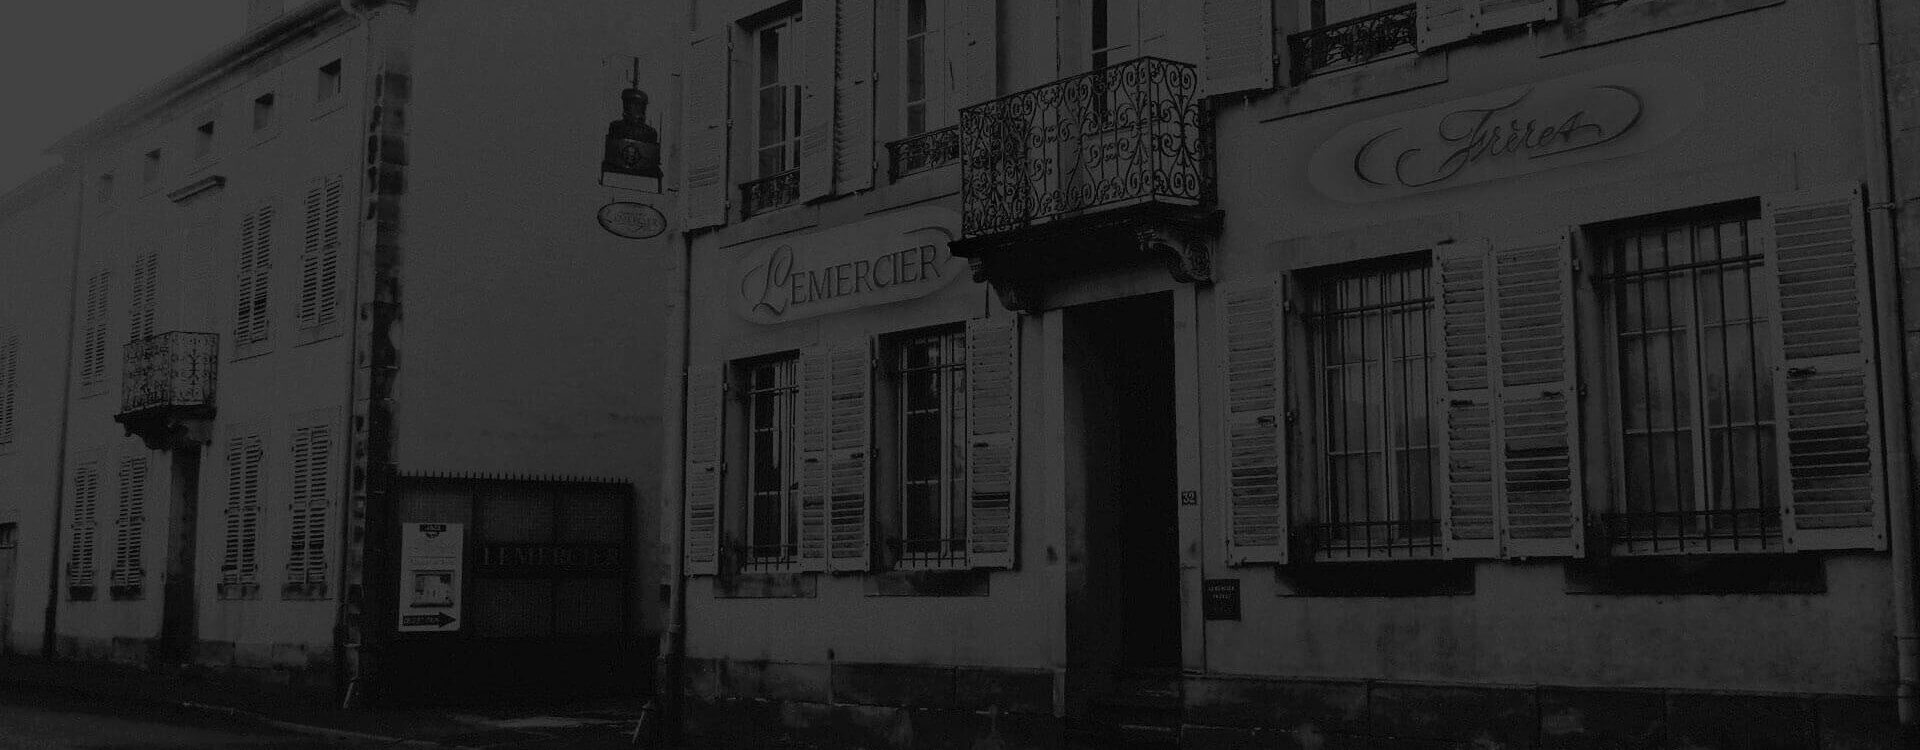 Lemercier Distillery